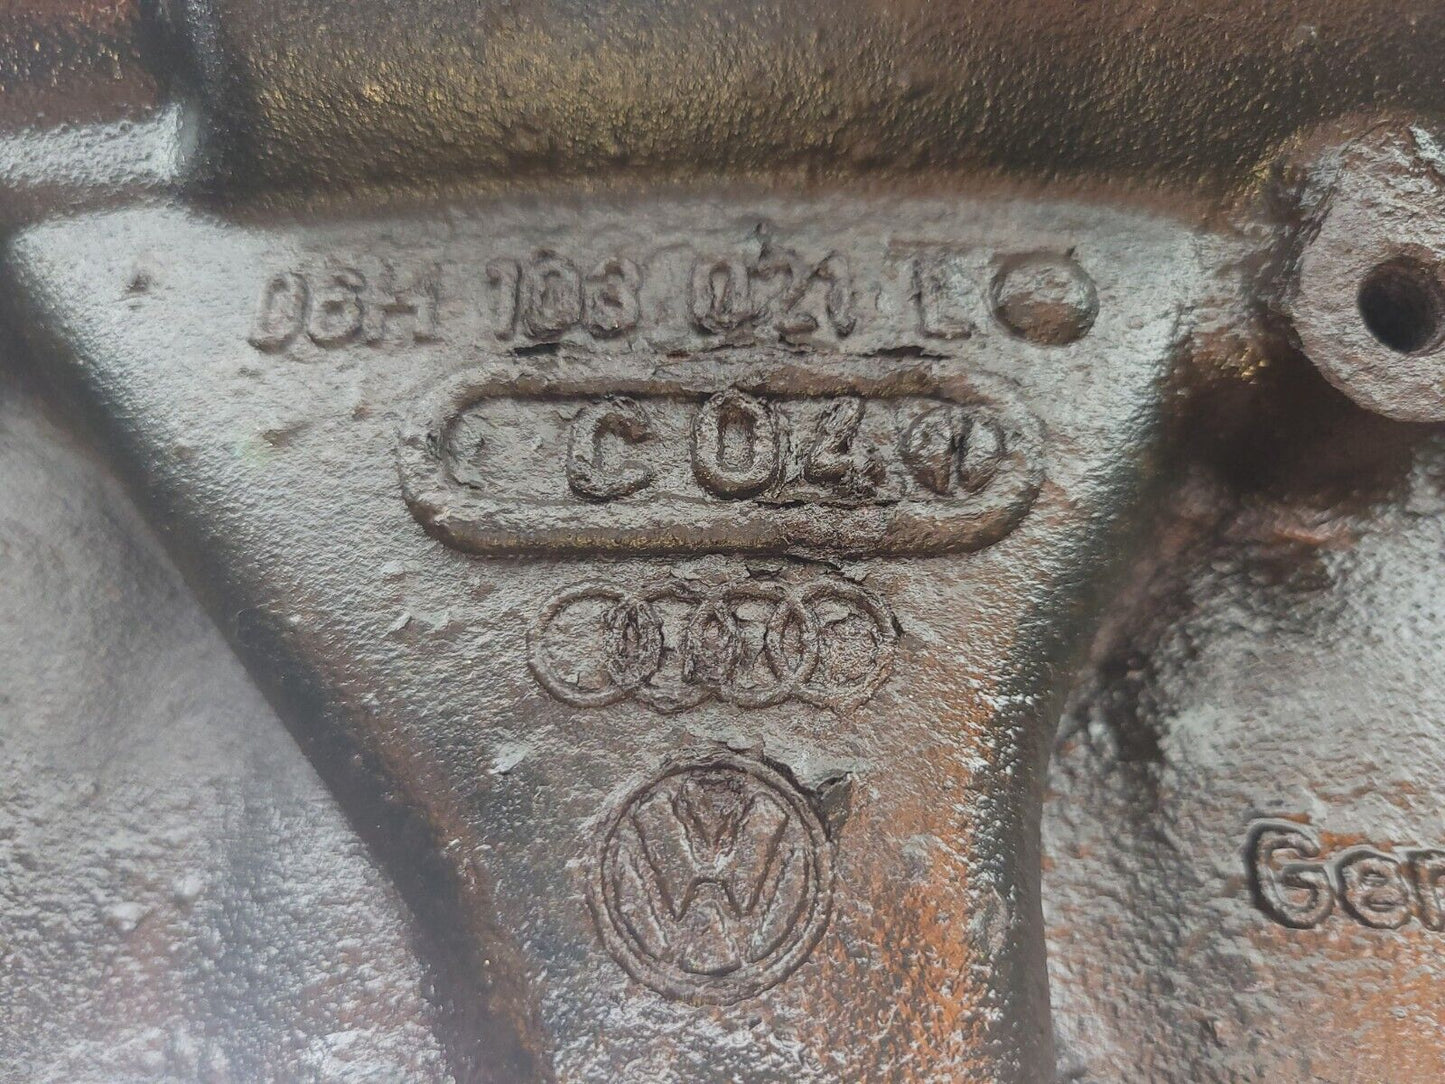 09 - 17 Volkswagen Tiguan Engine Cylinder Block 2.0t OEM